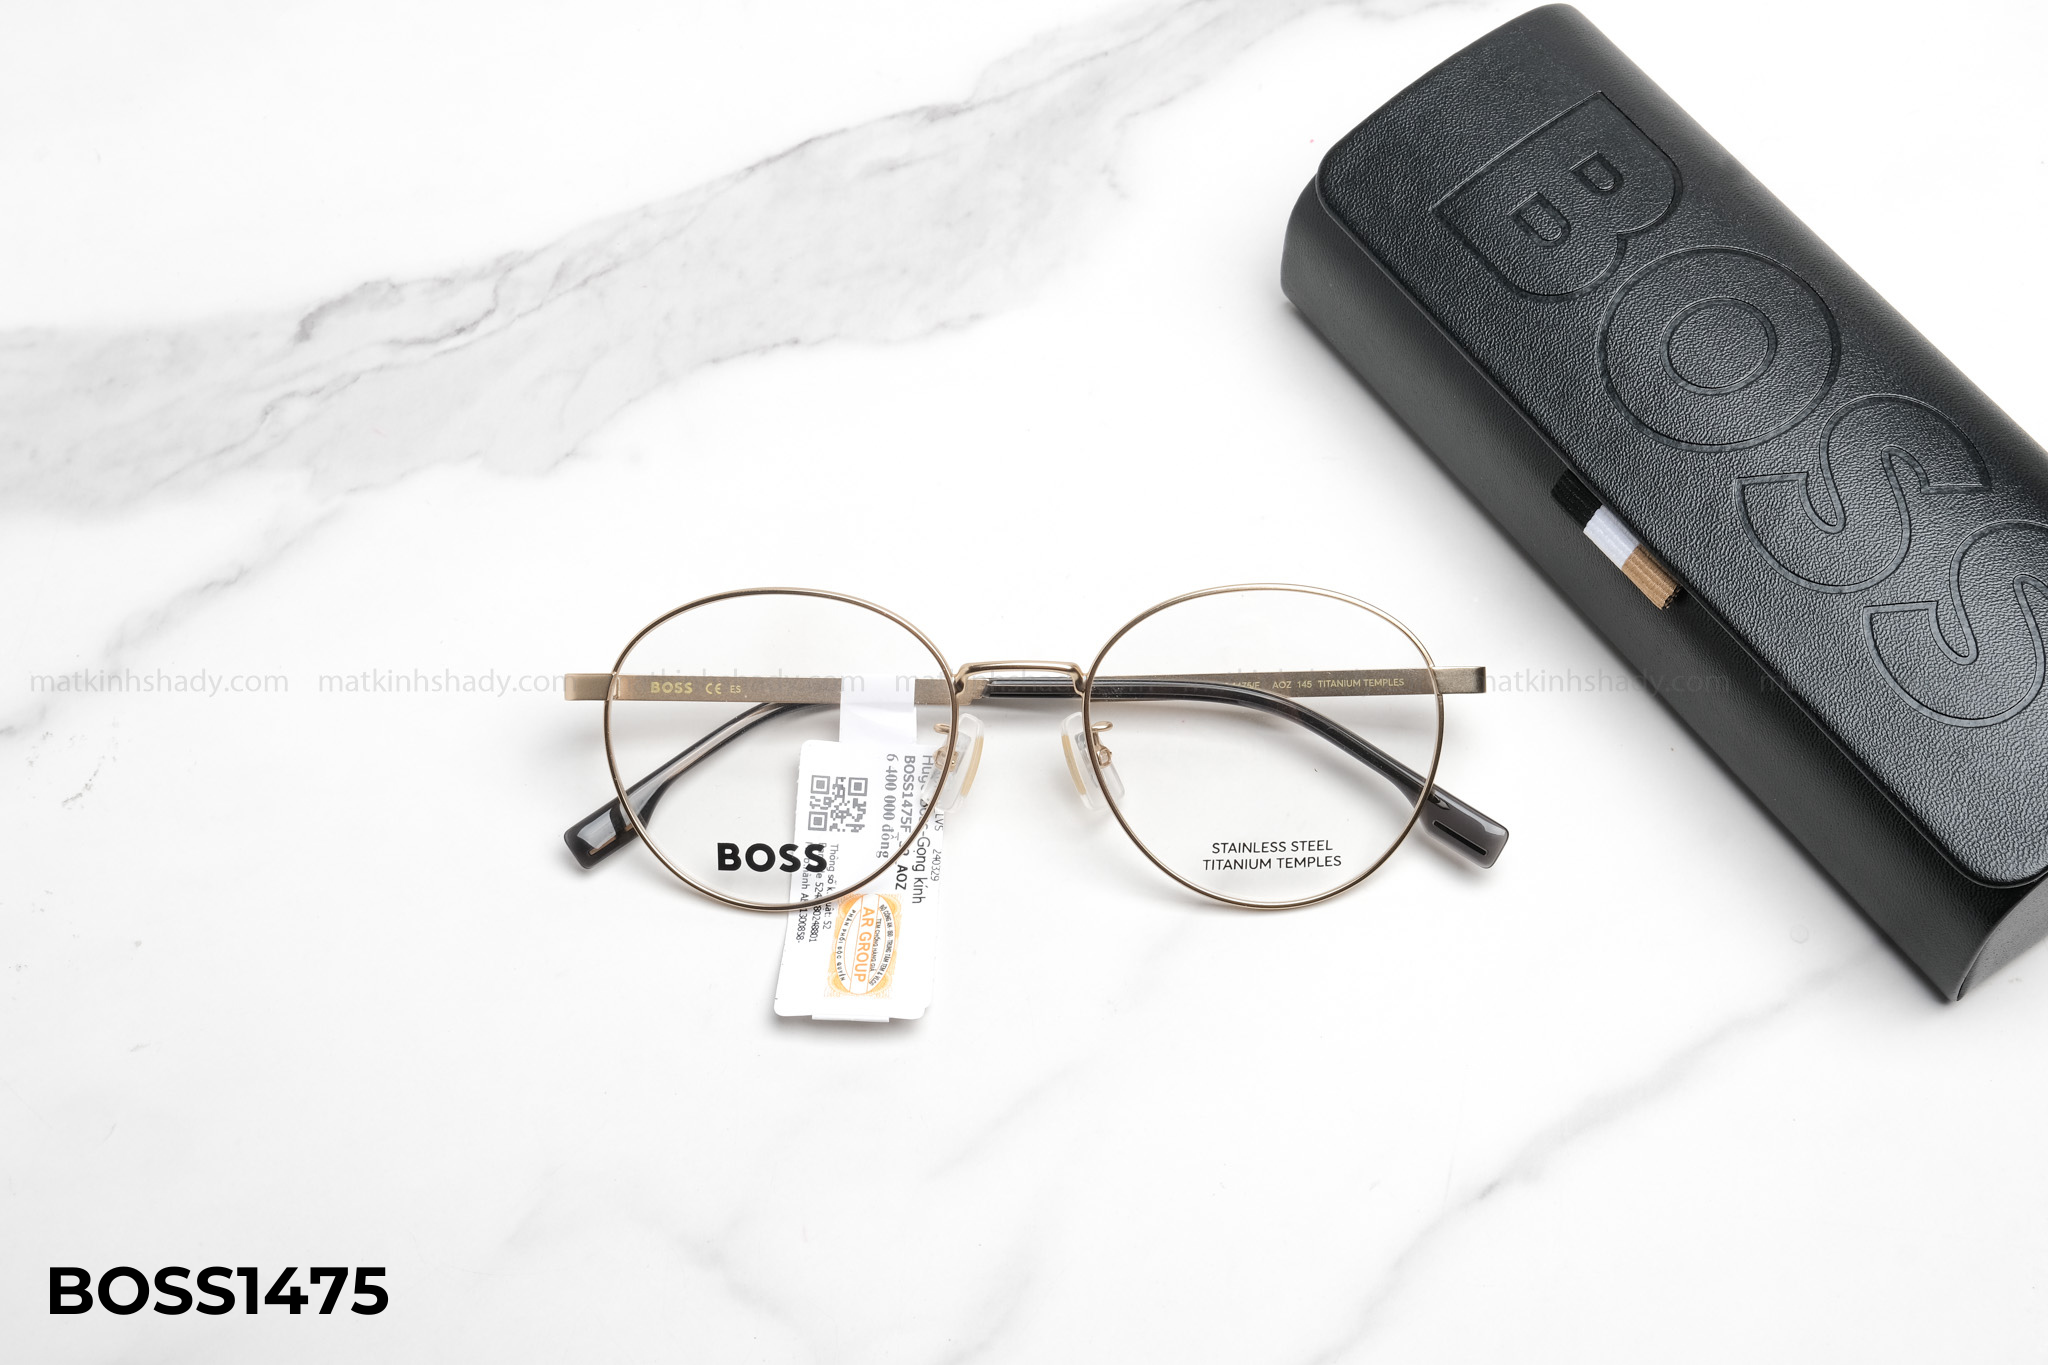  Boss Eyewear - Glasses - BOSS1475 